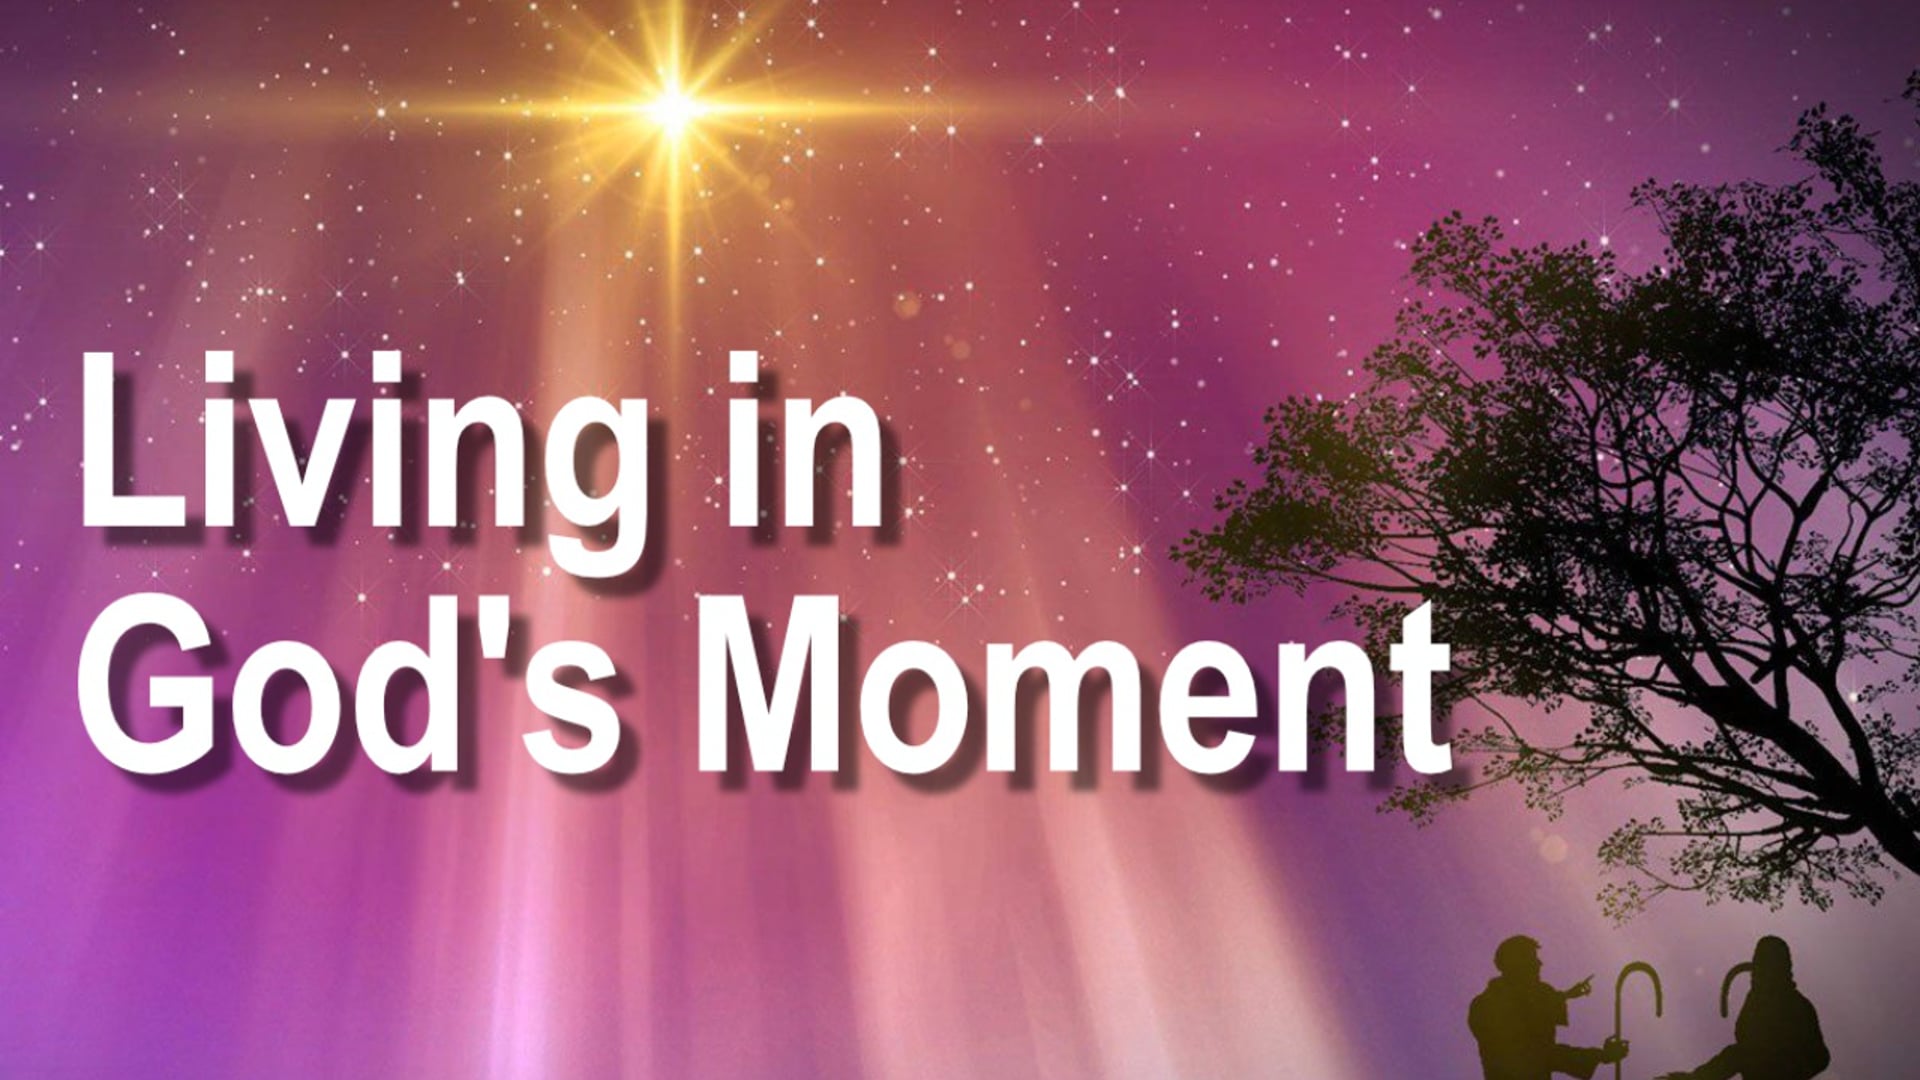 Dec 5, 2021 Living In God's Moment